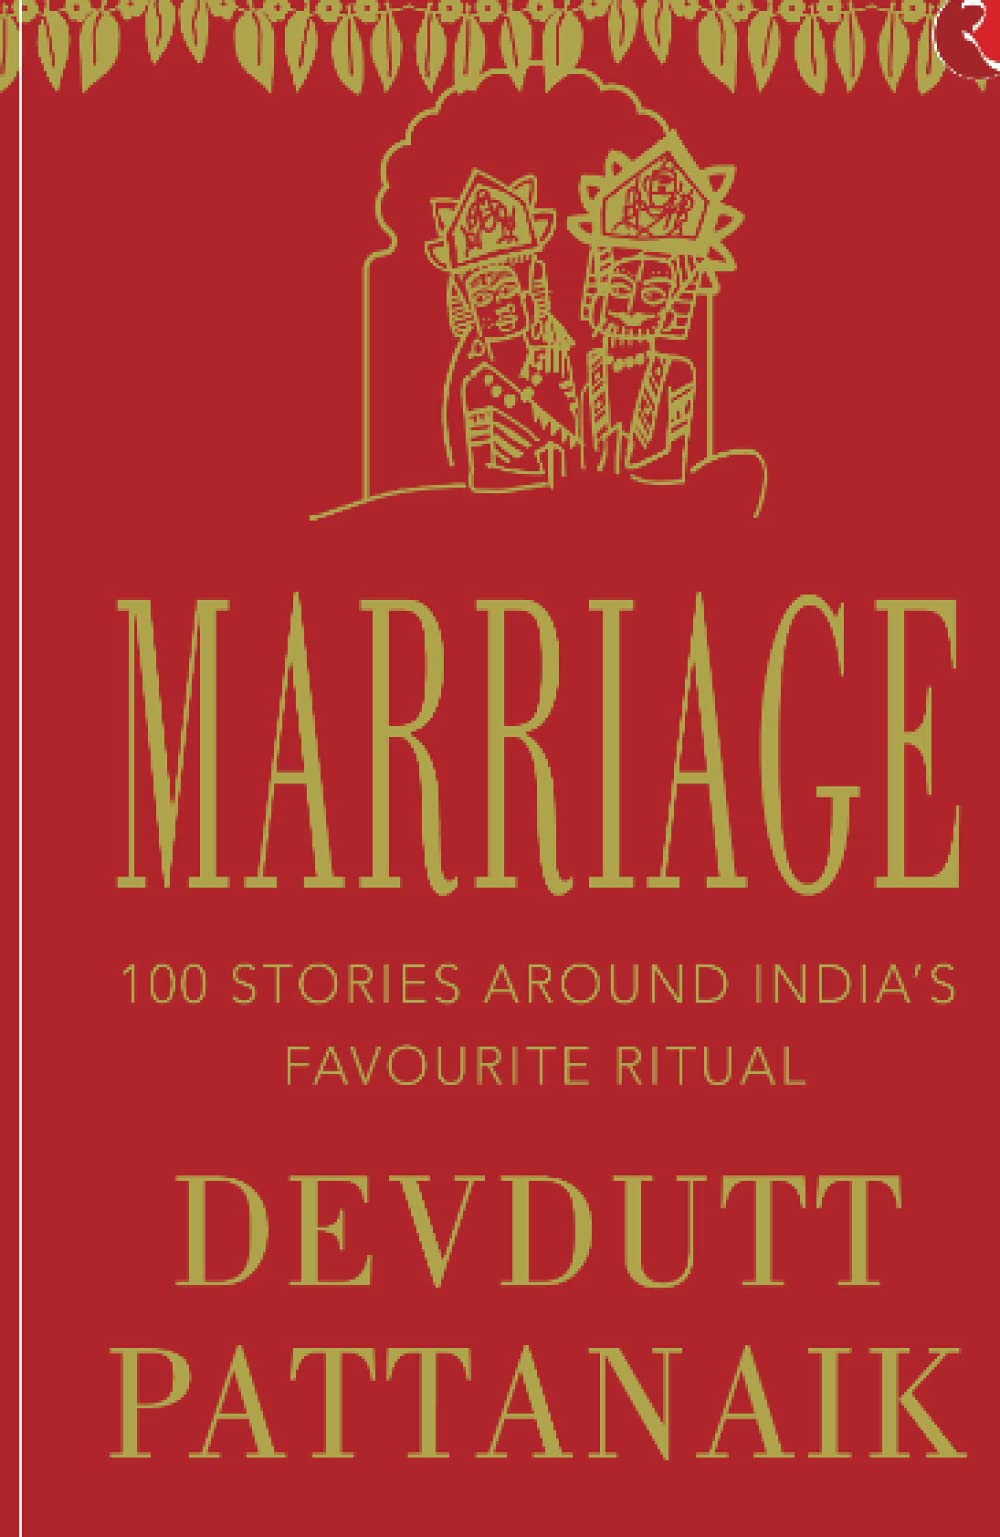 MARRIAGE TITLE: 100 STORIES AROUND INDIA’S FAVOURITE RITUAL